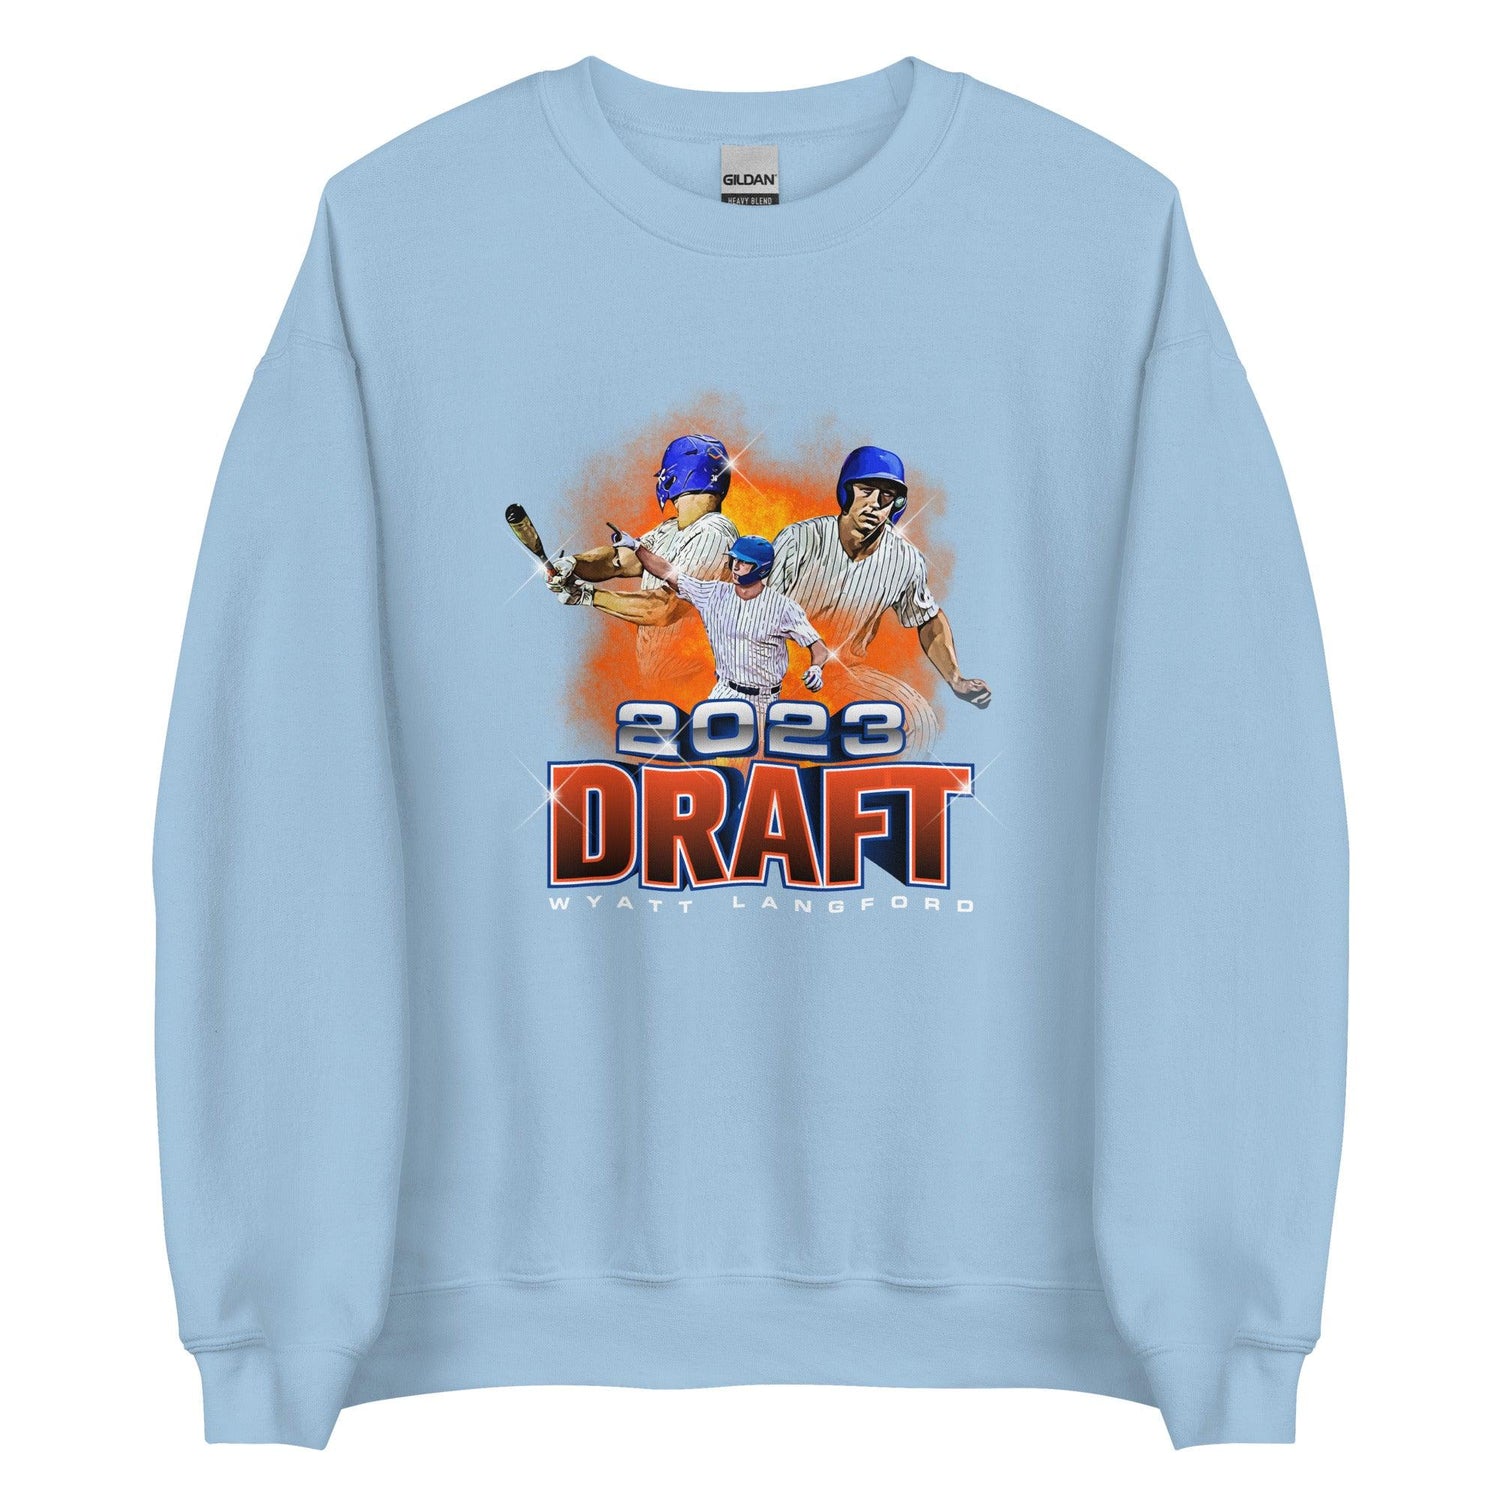 Wyatt Langford "MLB Draft" Sweatshirt - Fan Arch